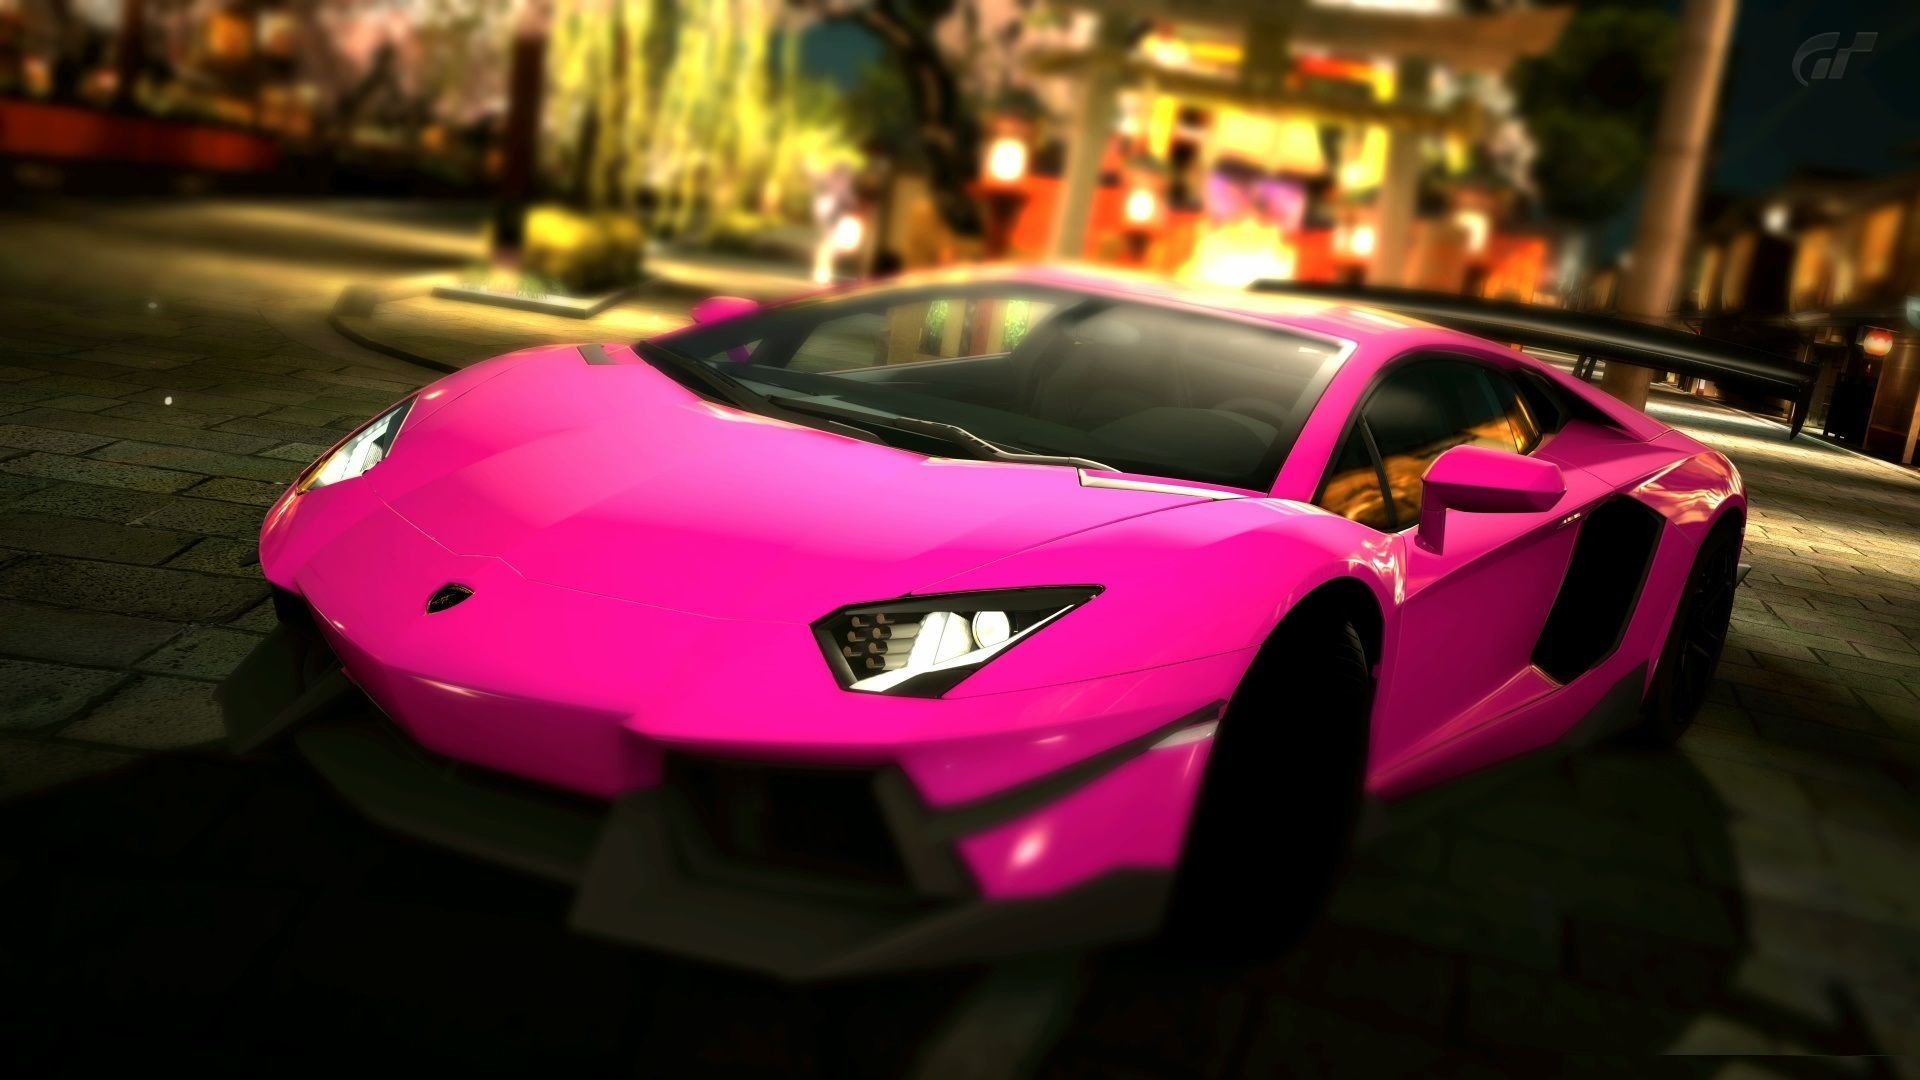 Pink Cars Wallpaper HD for Desktop (70+ pictures)